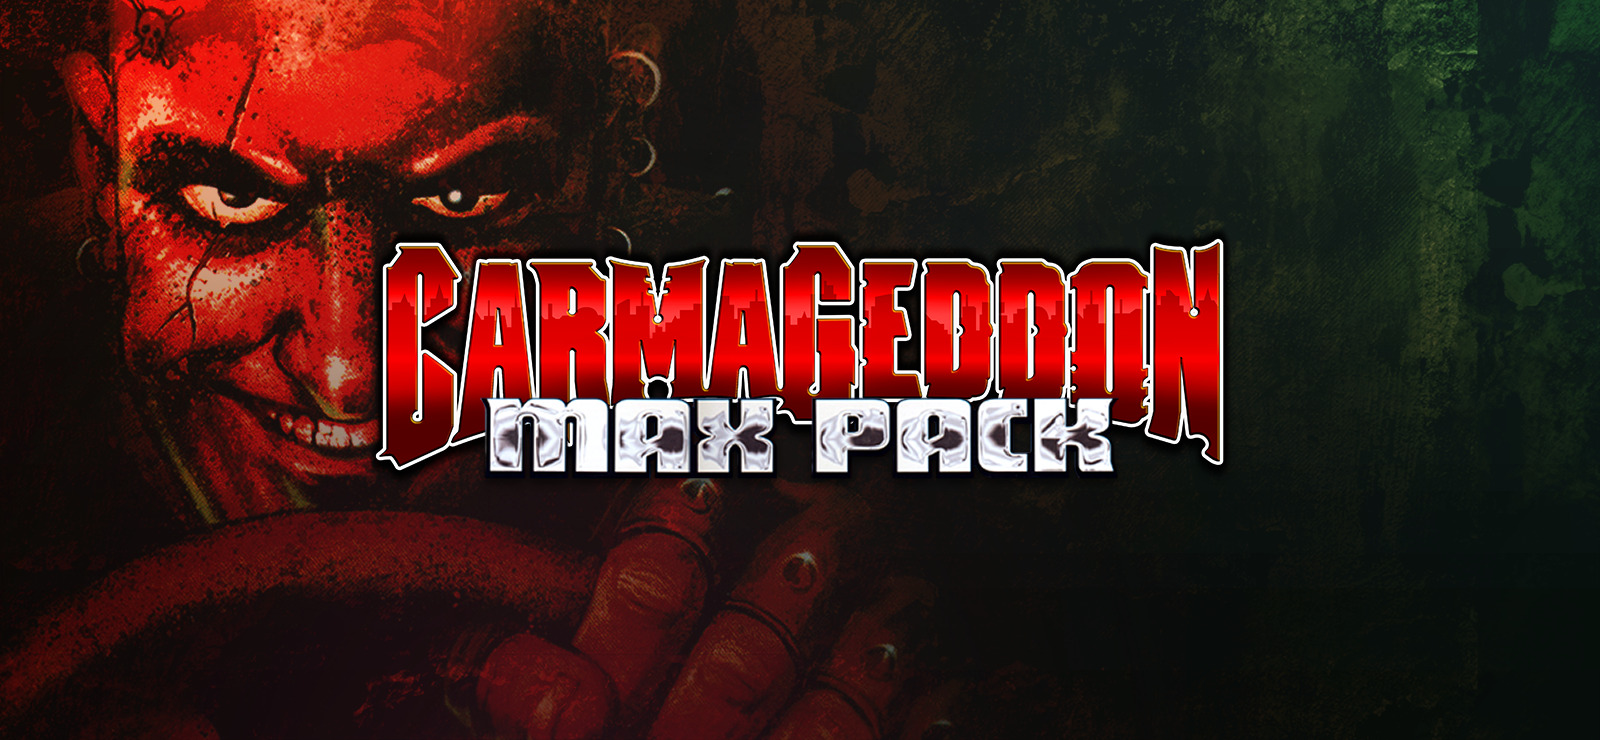 Carmageddon: Splat Pack